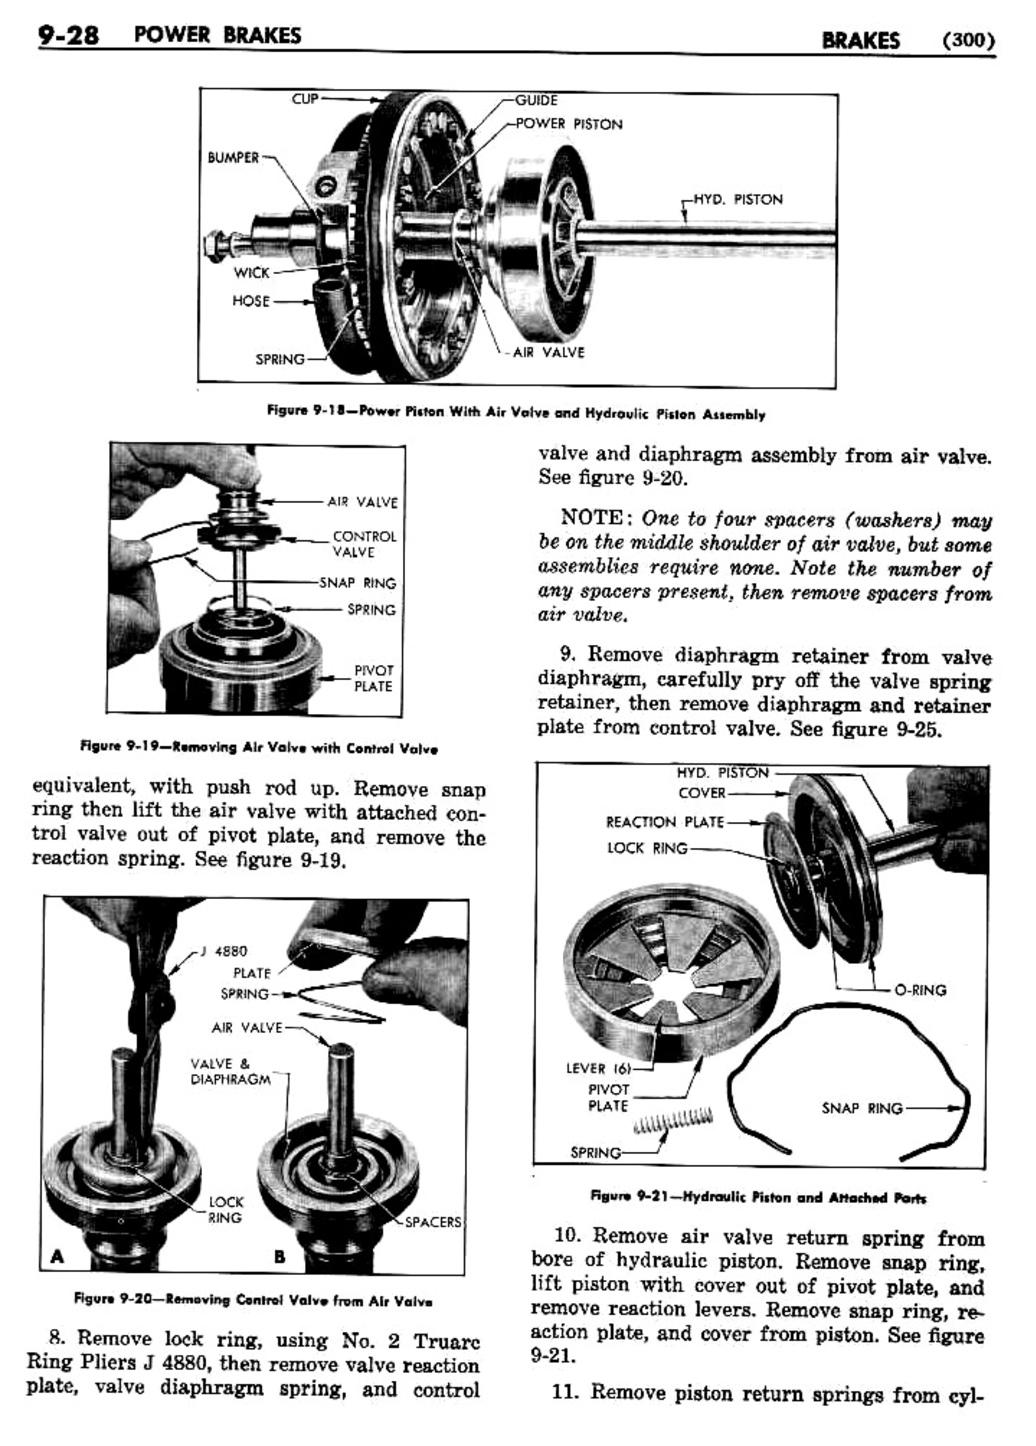 n_10 1955 Buick Shop Manual - Brakes-028-028.jpg